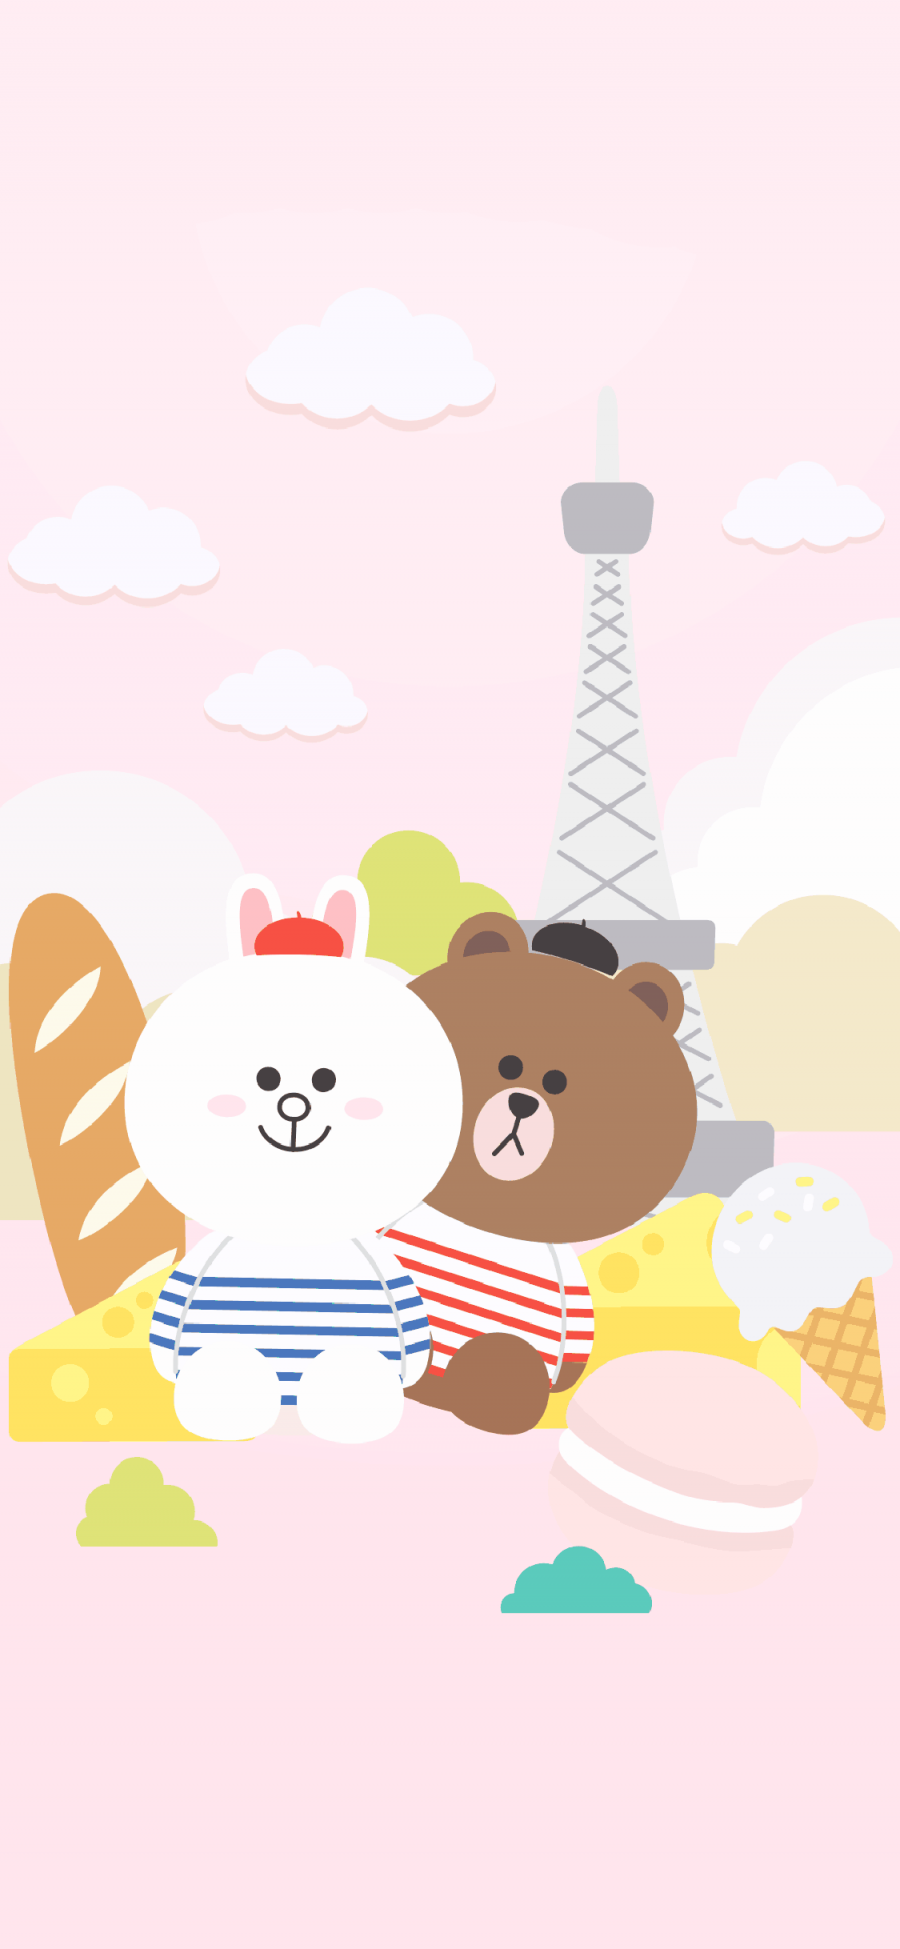 [2436×1125]line friends 布朗熊 可妮兔 可爱 粉色 卡通 苹果手机动漫壁纸图片